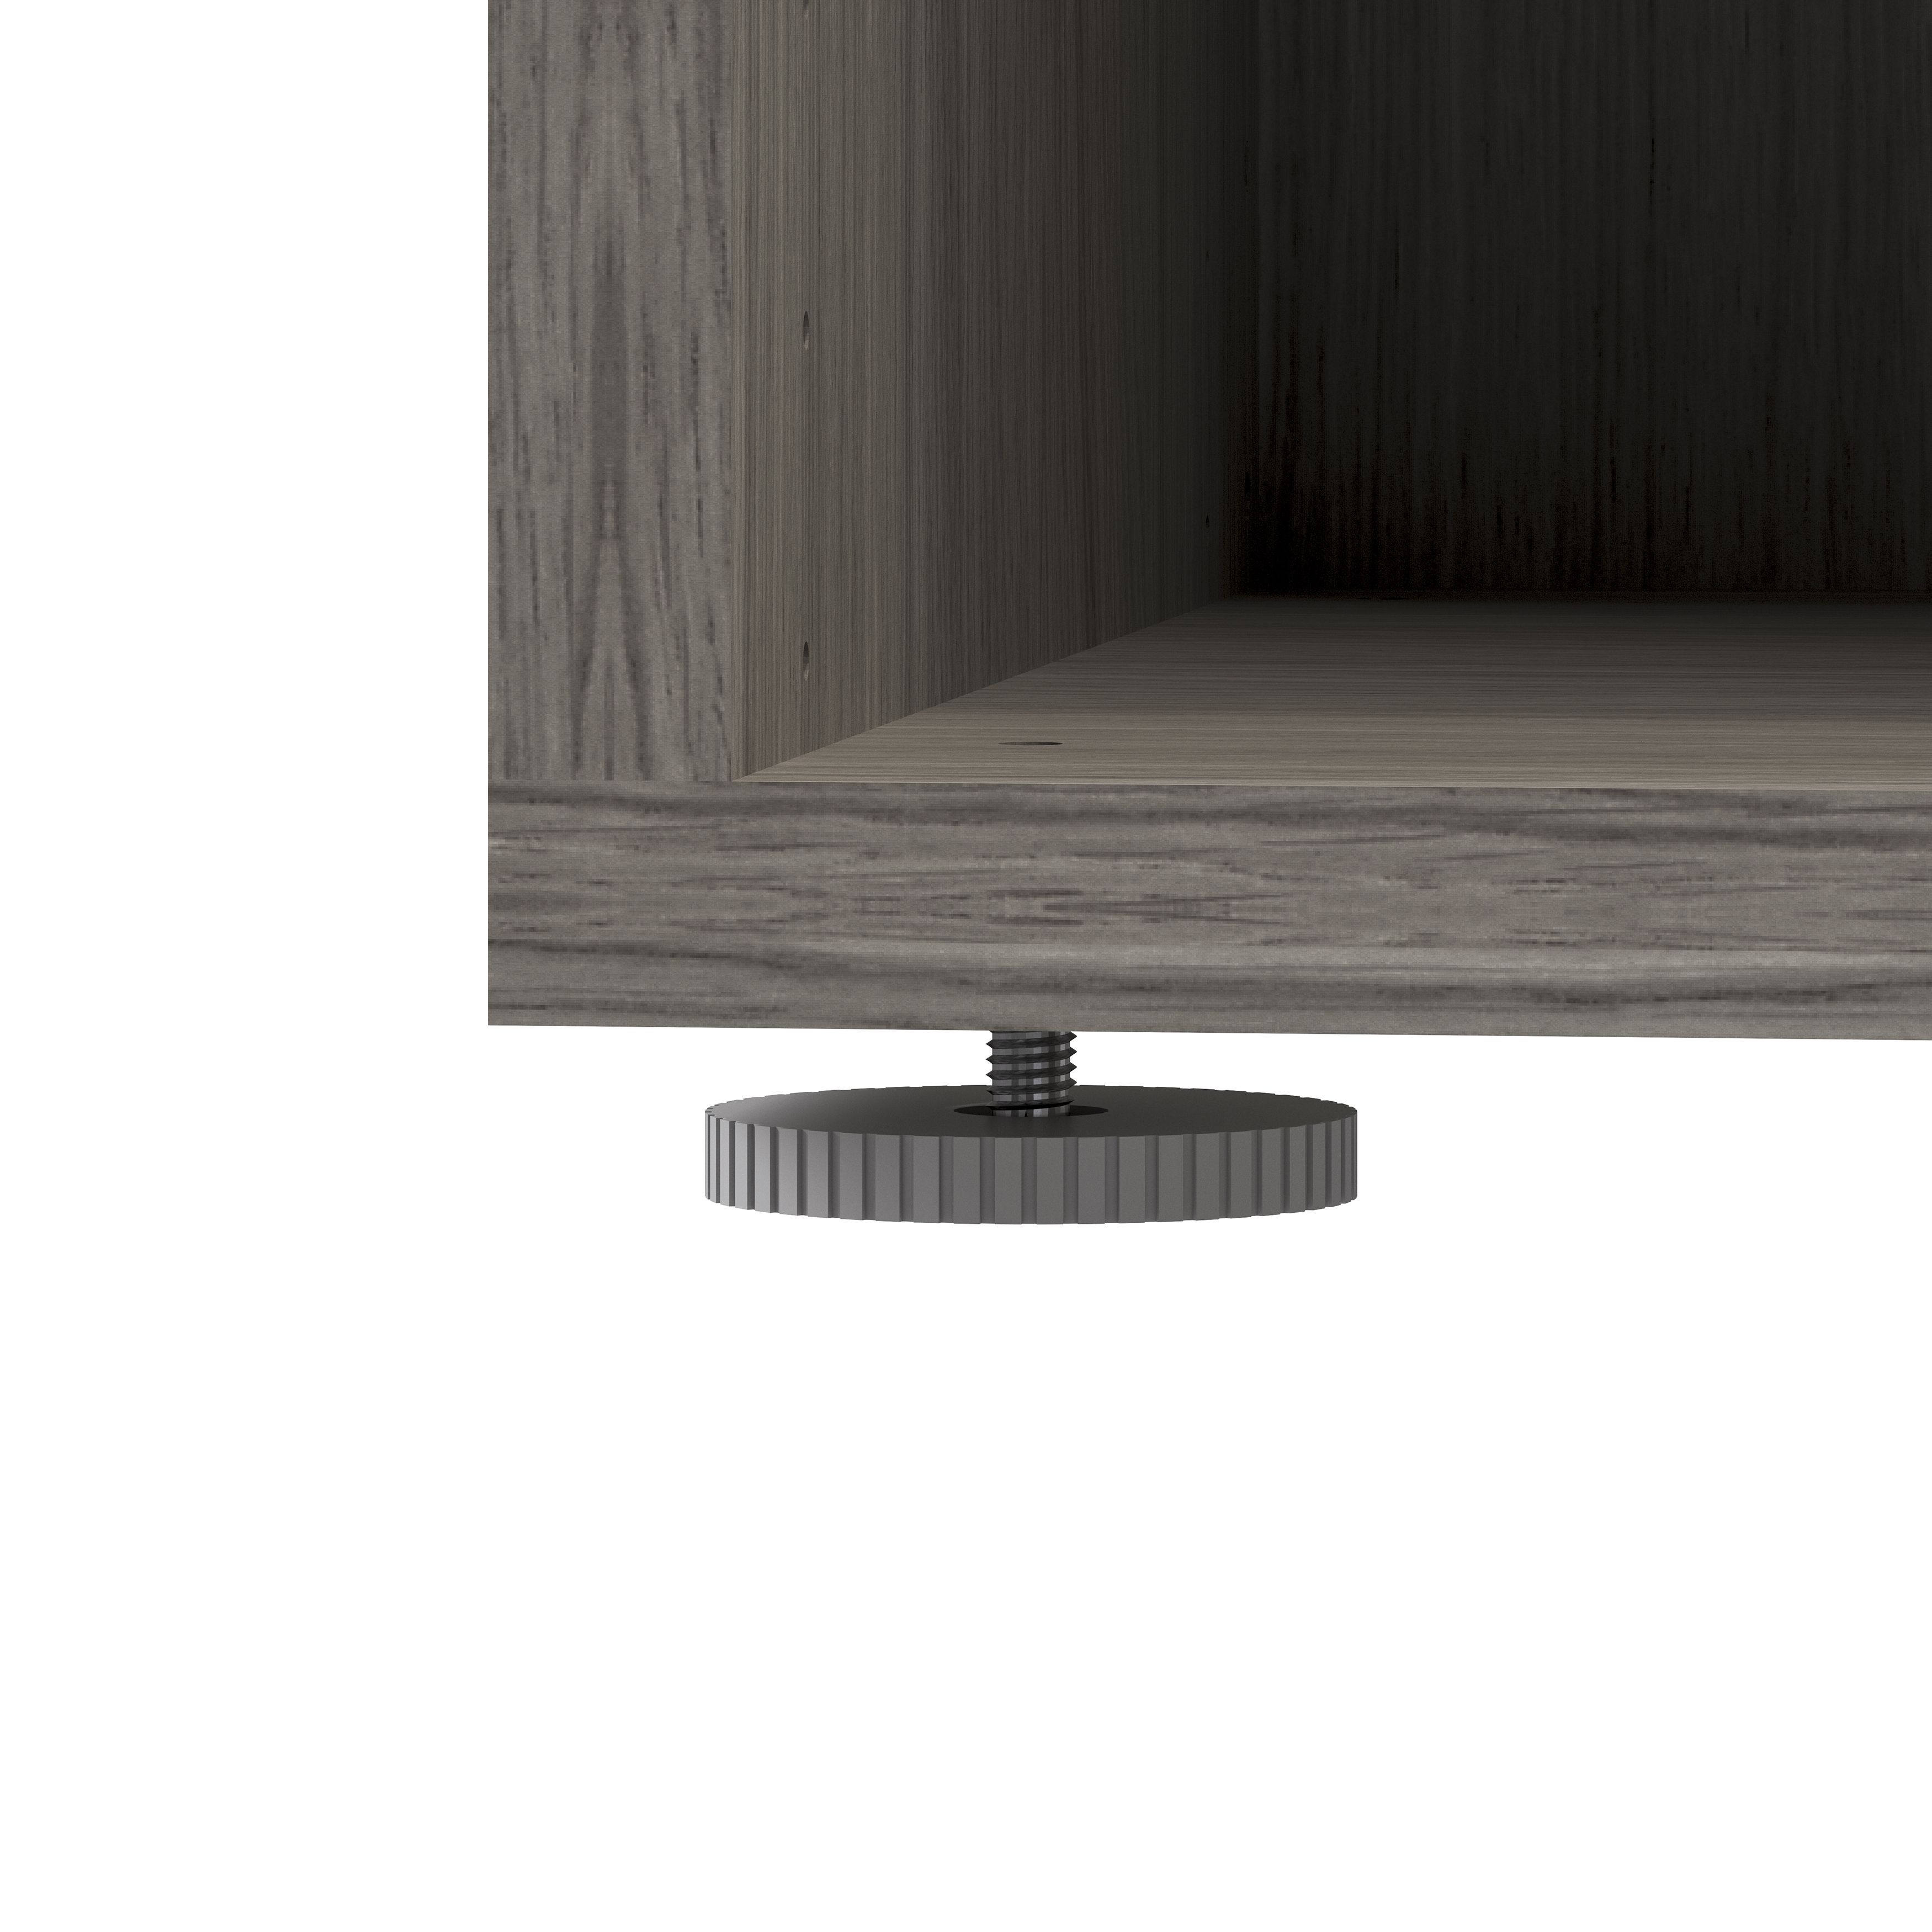 GoodHome Atomia Matt Grey oak effect Modular furniture cabinet, (H)750mm (W)750mm (D)450mm